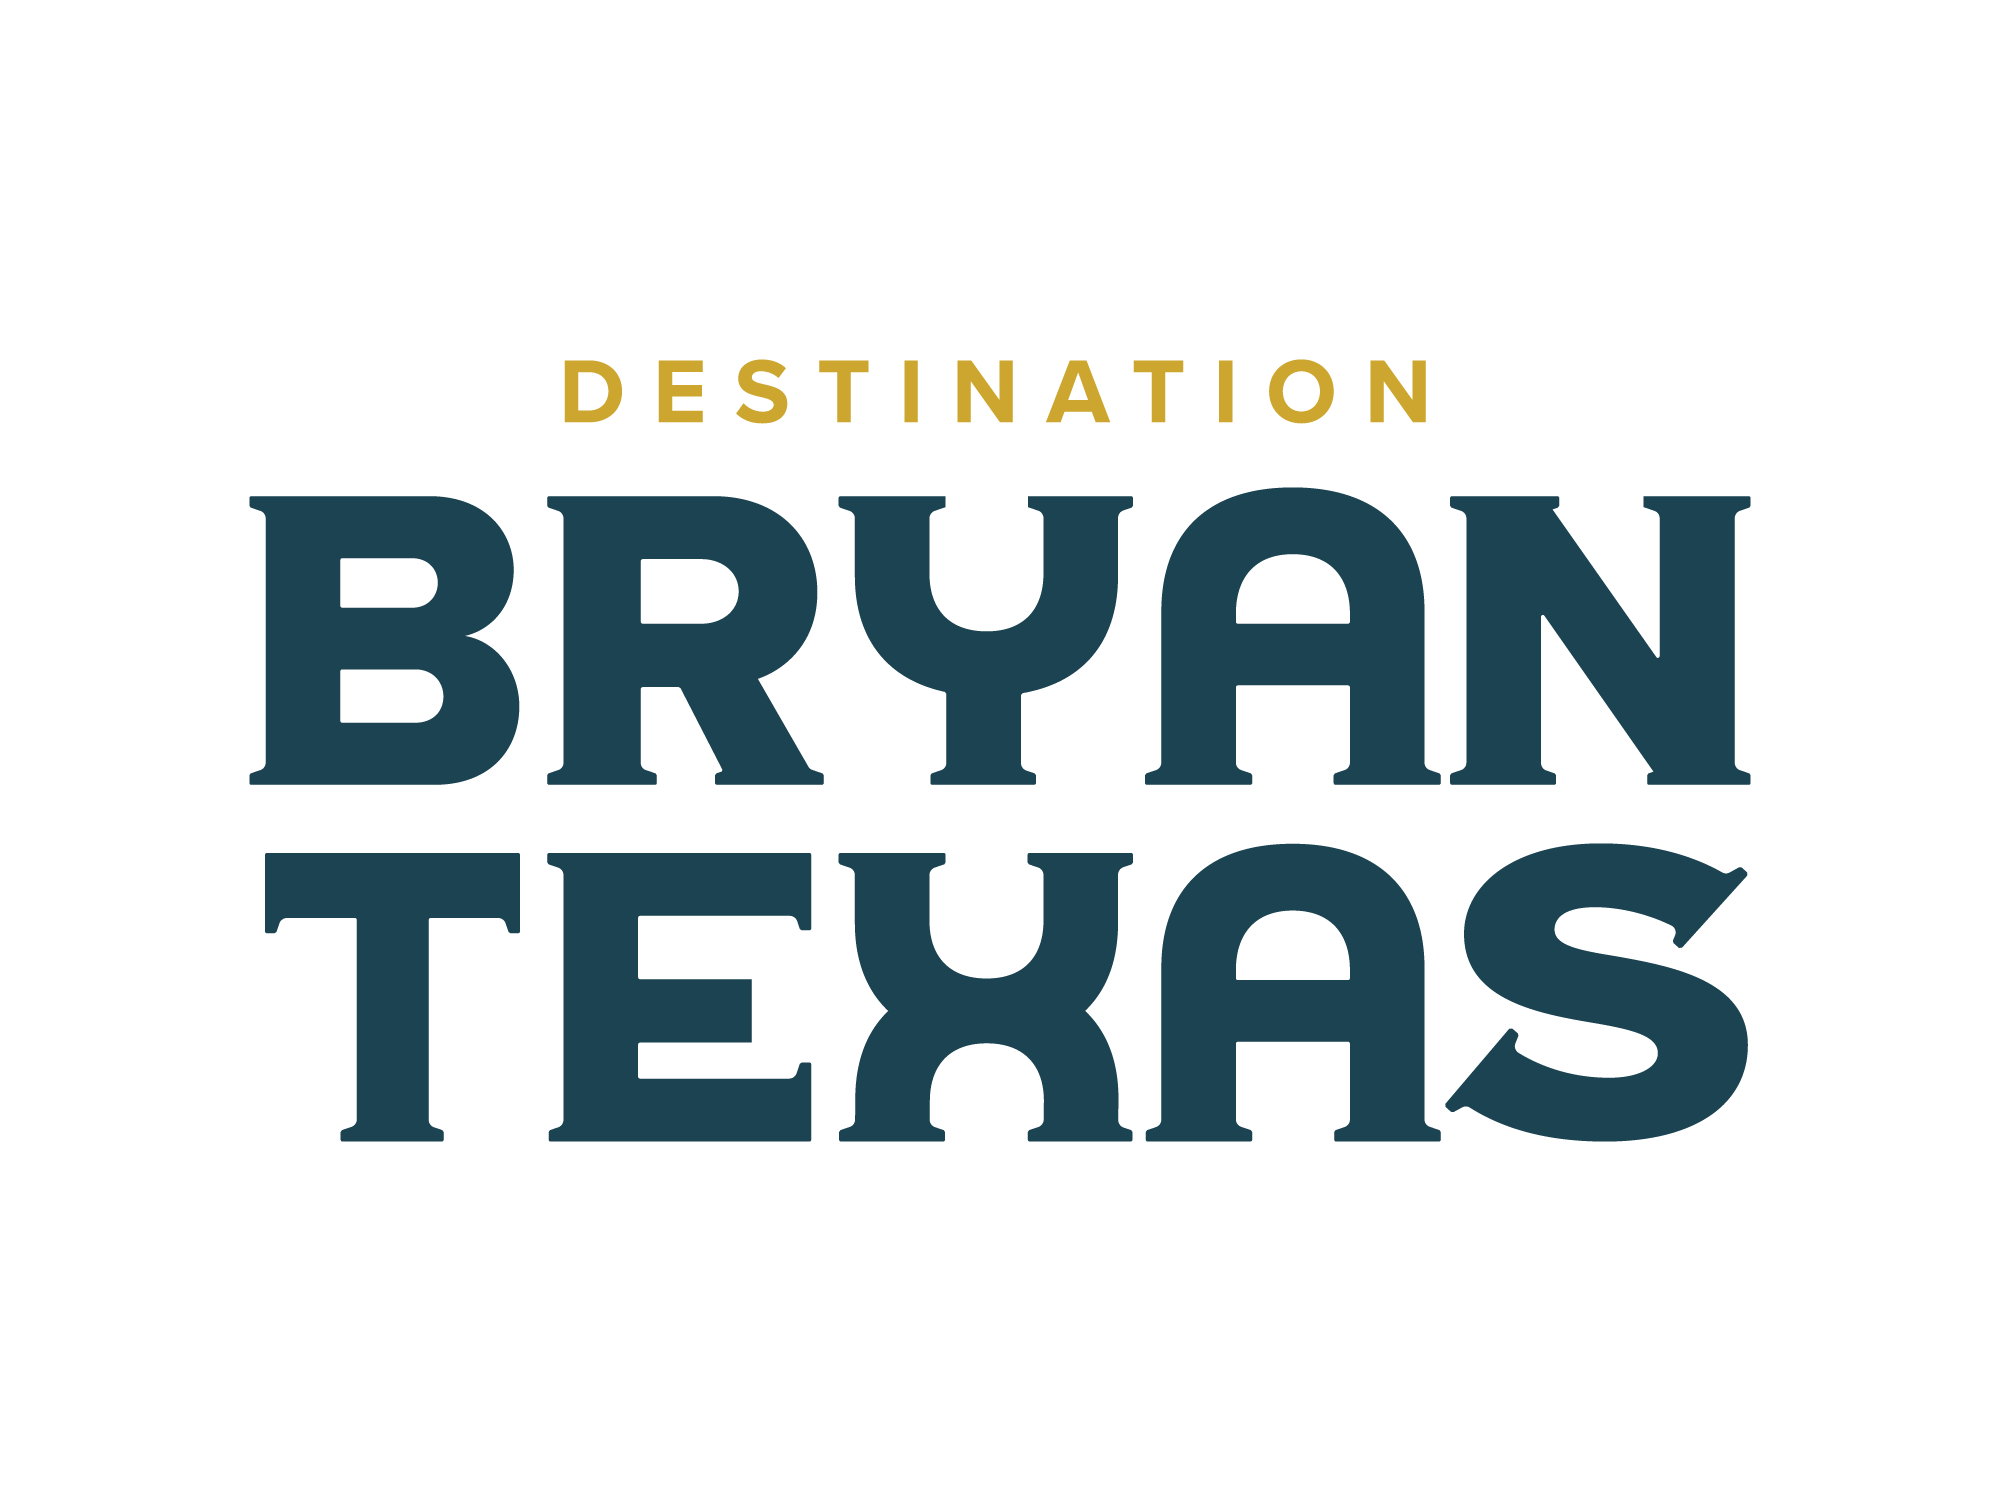 Destination Bryan Texas logo